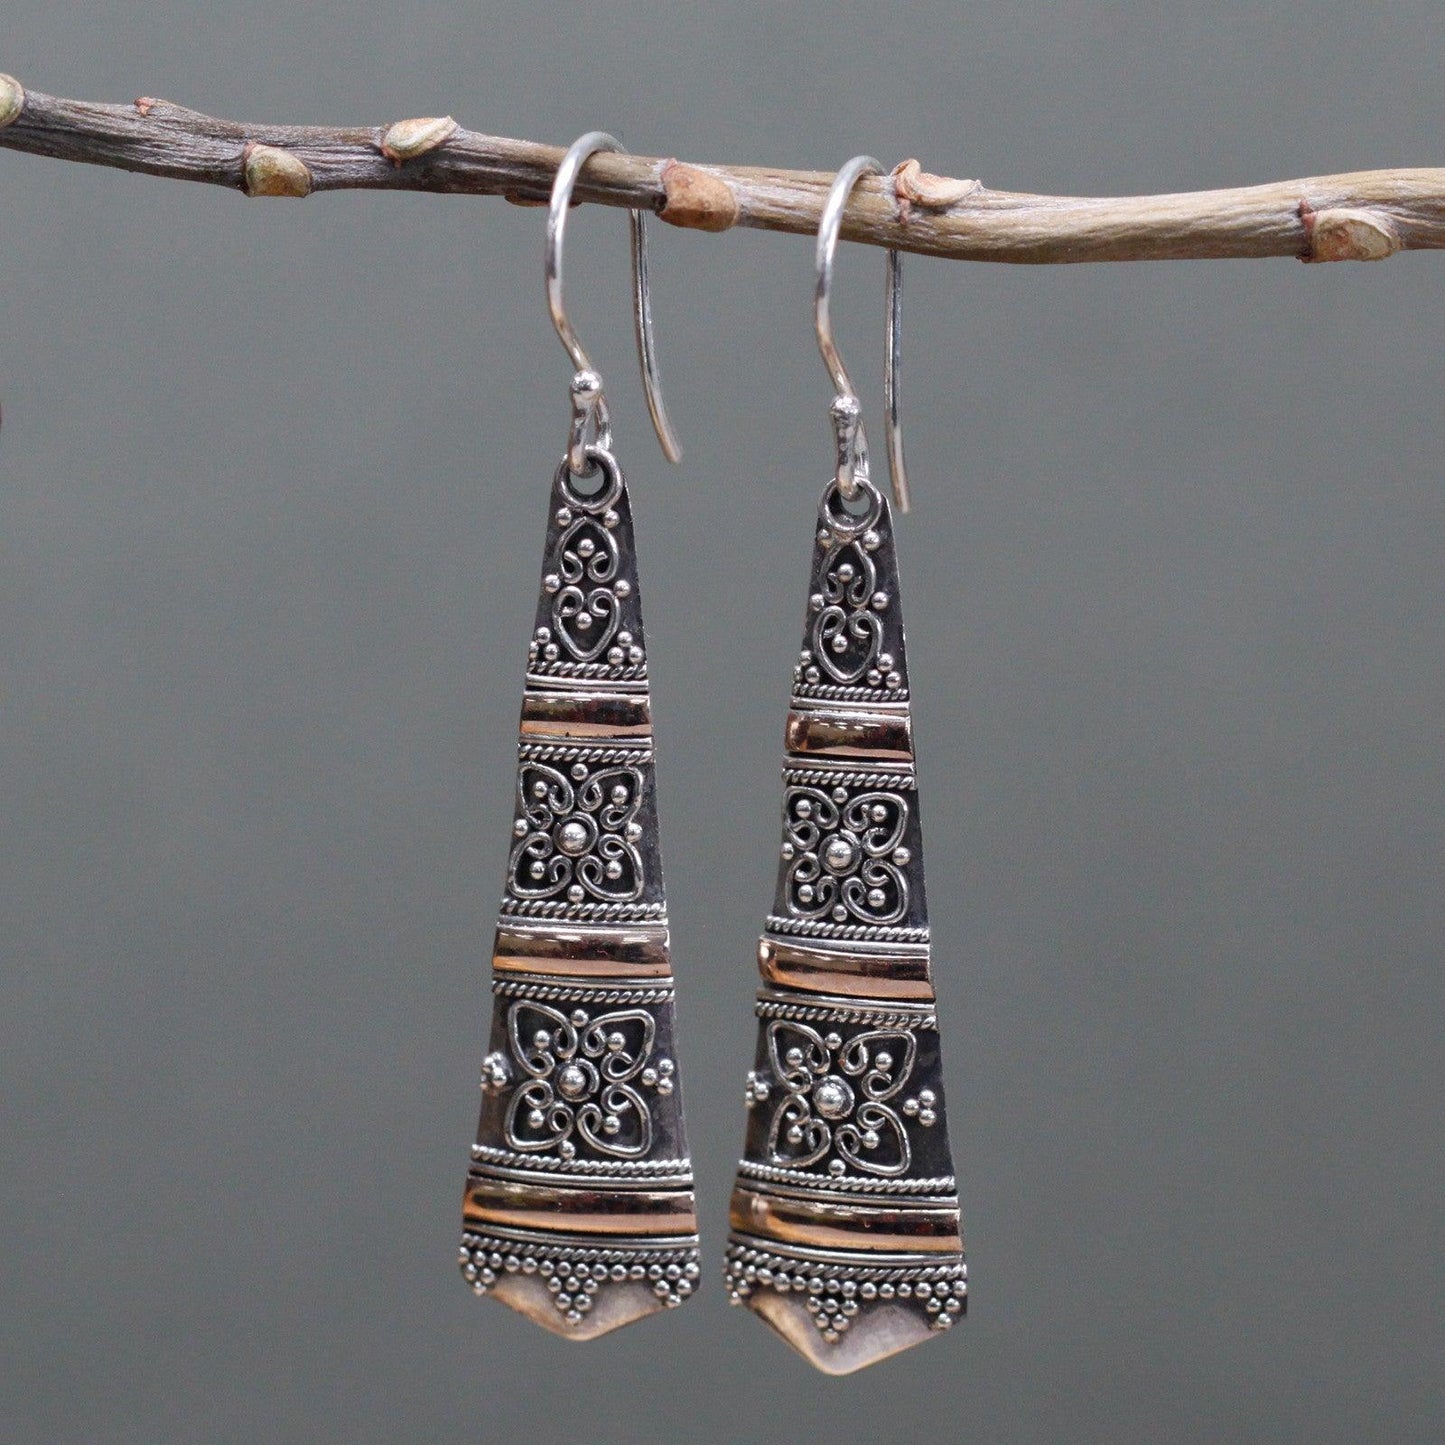 Handmade Bali Jewellery Silver & Gold Earring - Tribal Drops - DuvetDay.co.uk